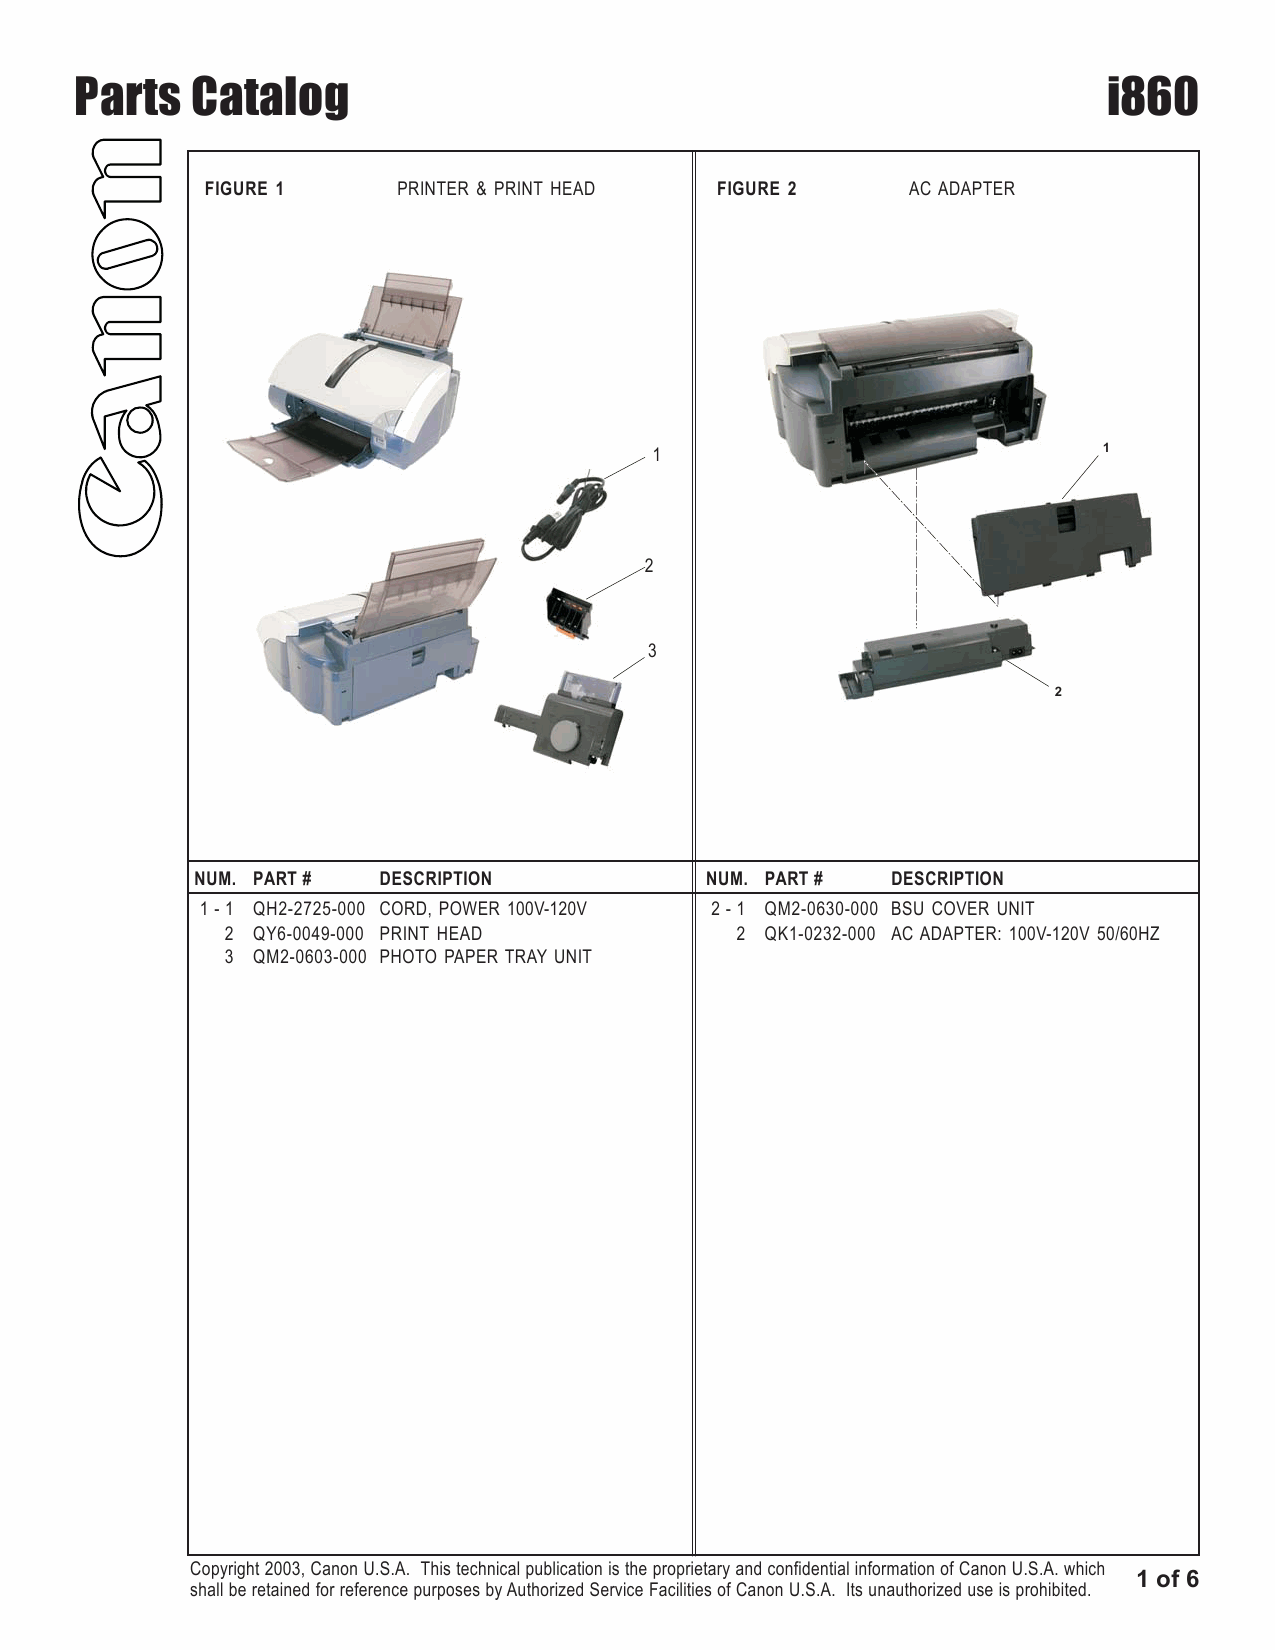 Canon PIXUS i860 Parts Catalog Manual-2